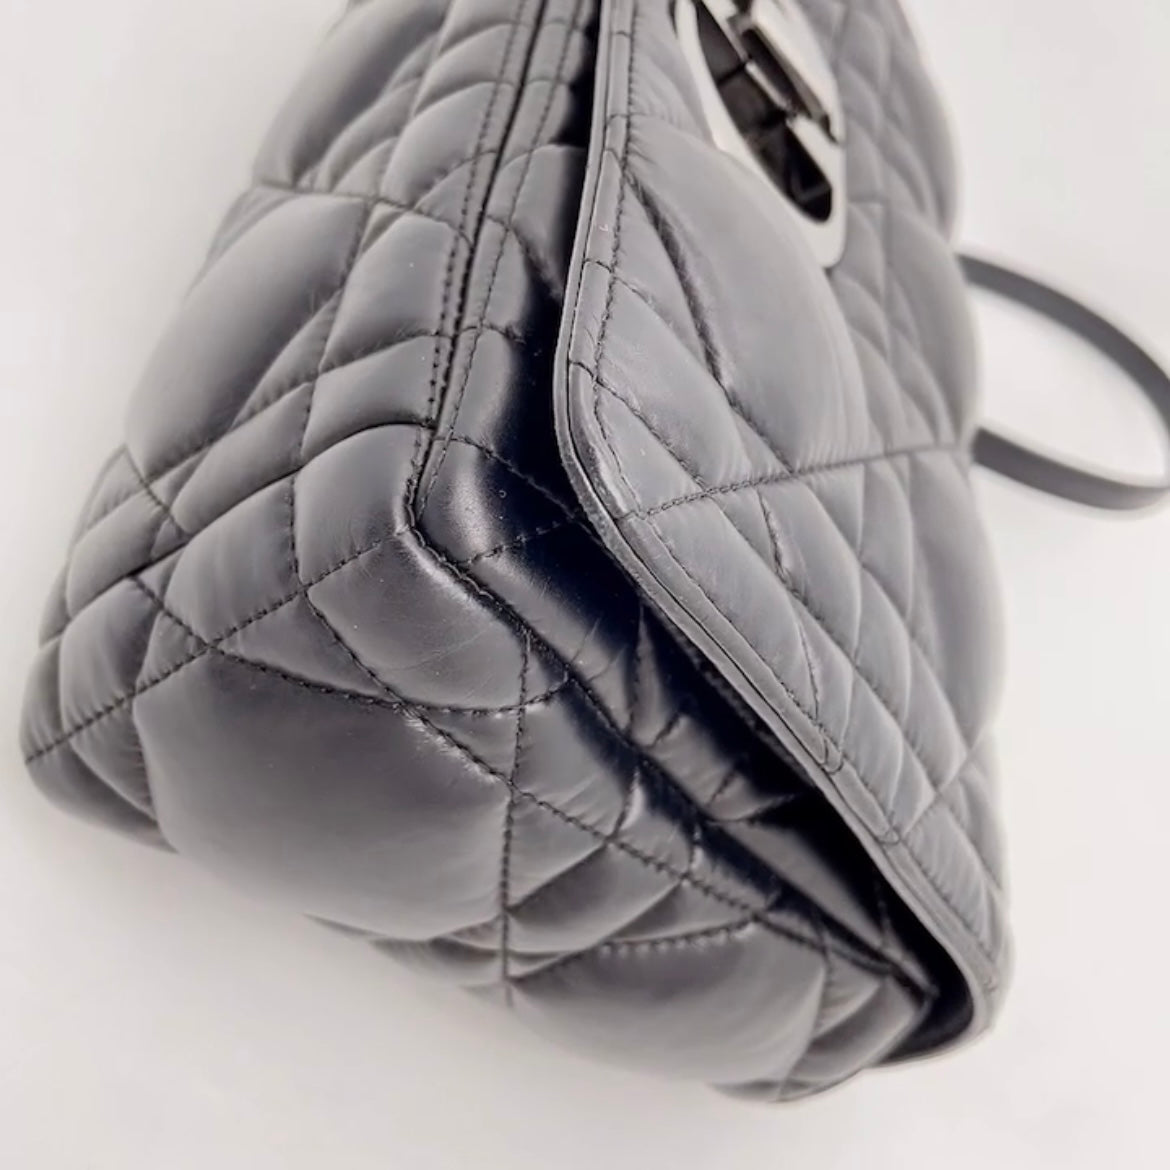 Bags, Lady Dior Sliver Microcannage Medium Metallic Bag